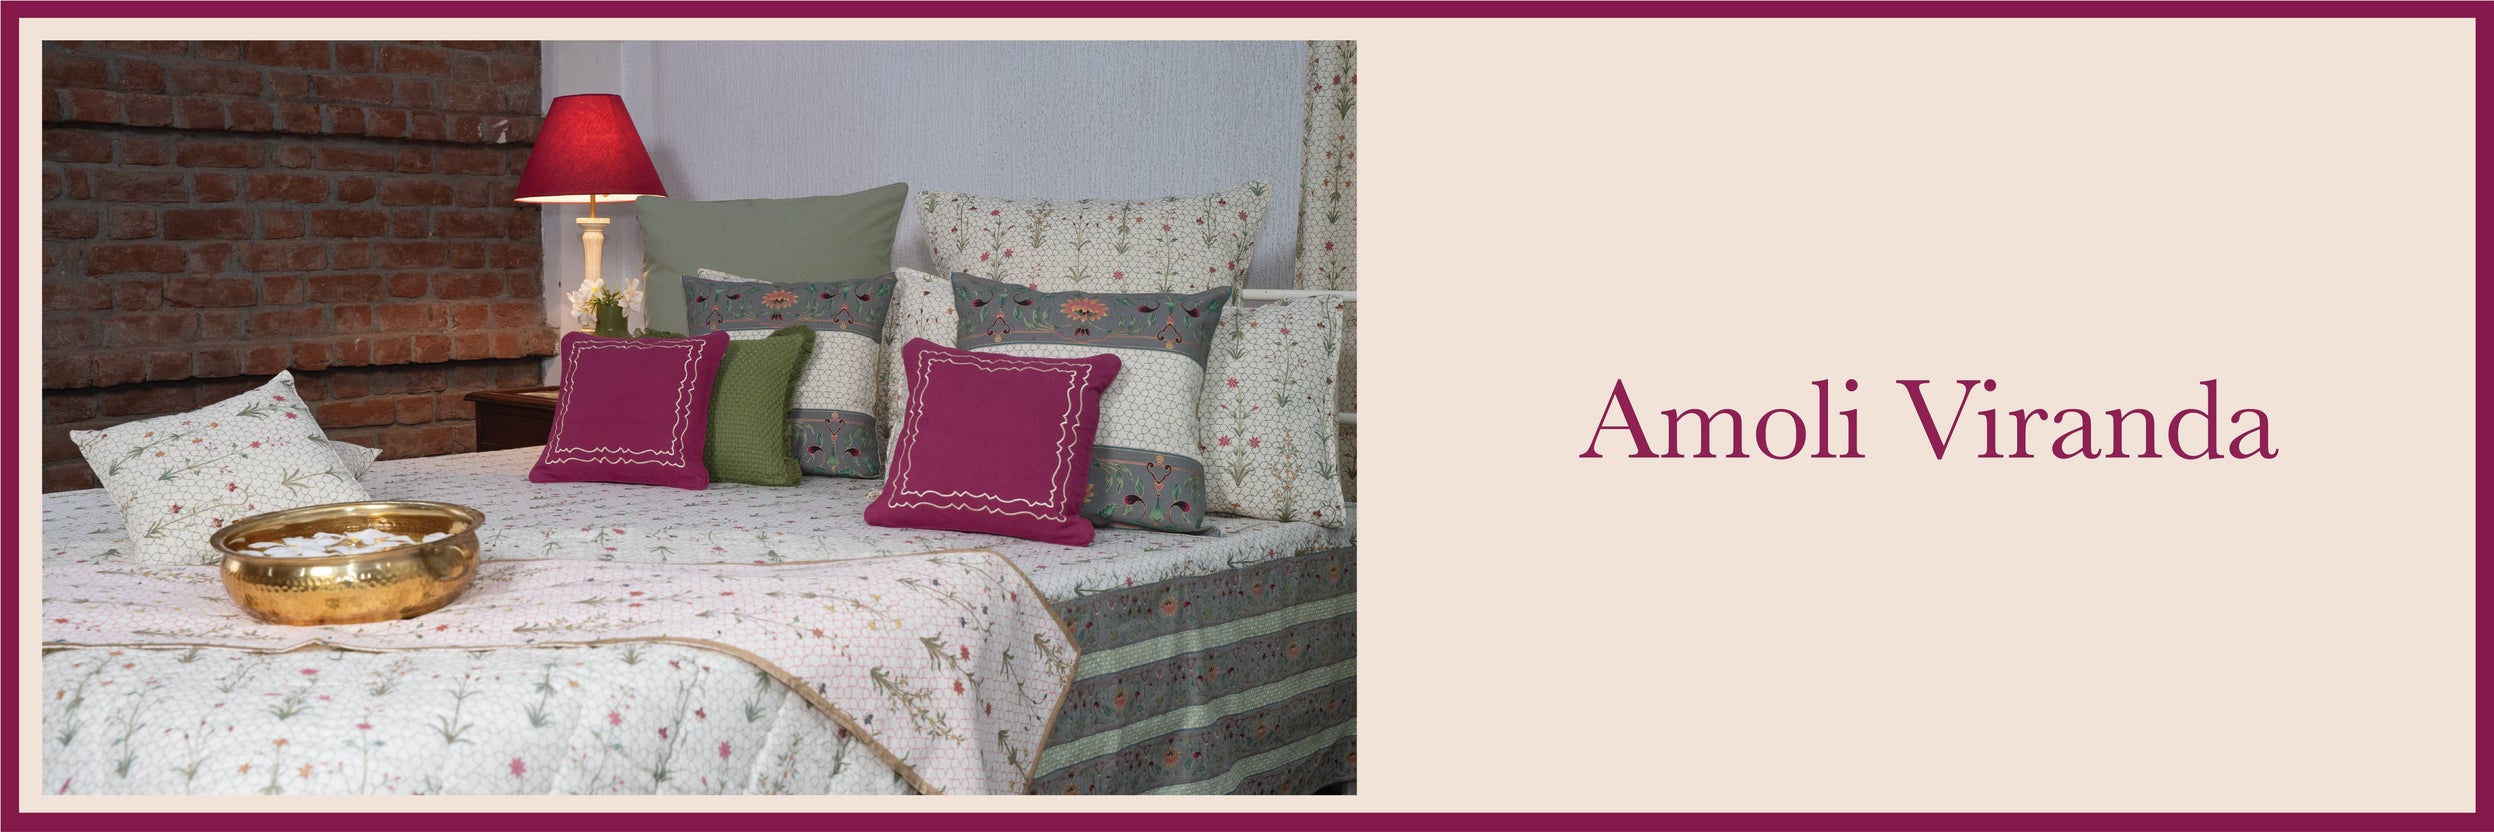 Amoli Viranda - Bedroom Collection